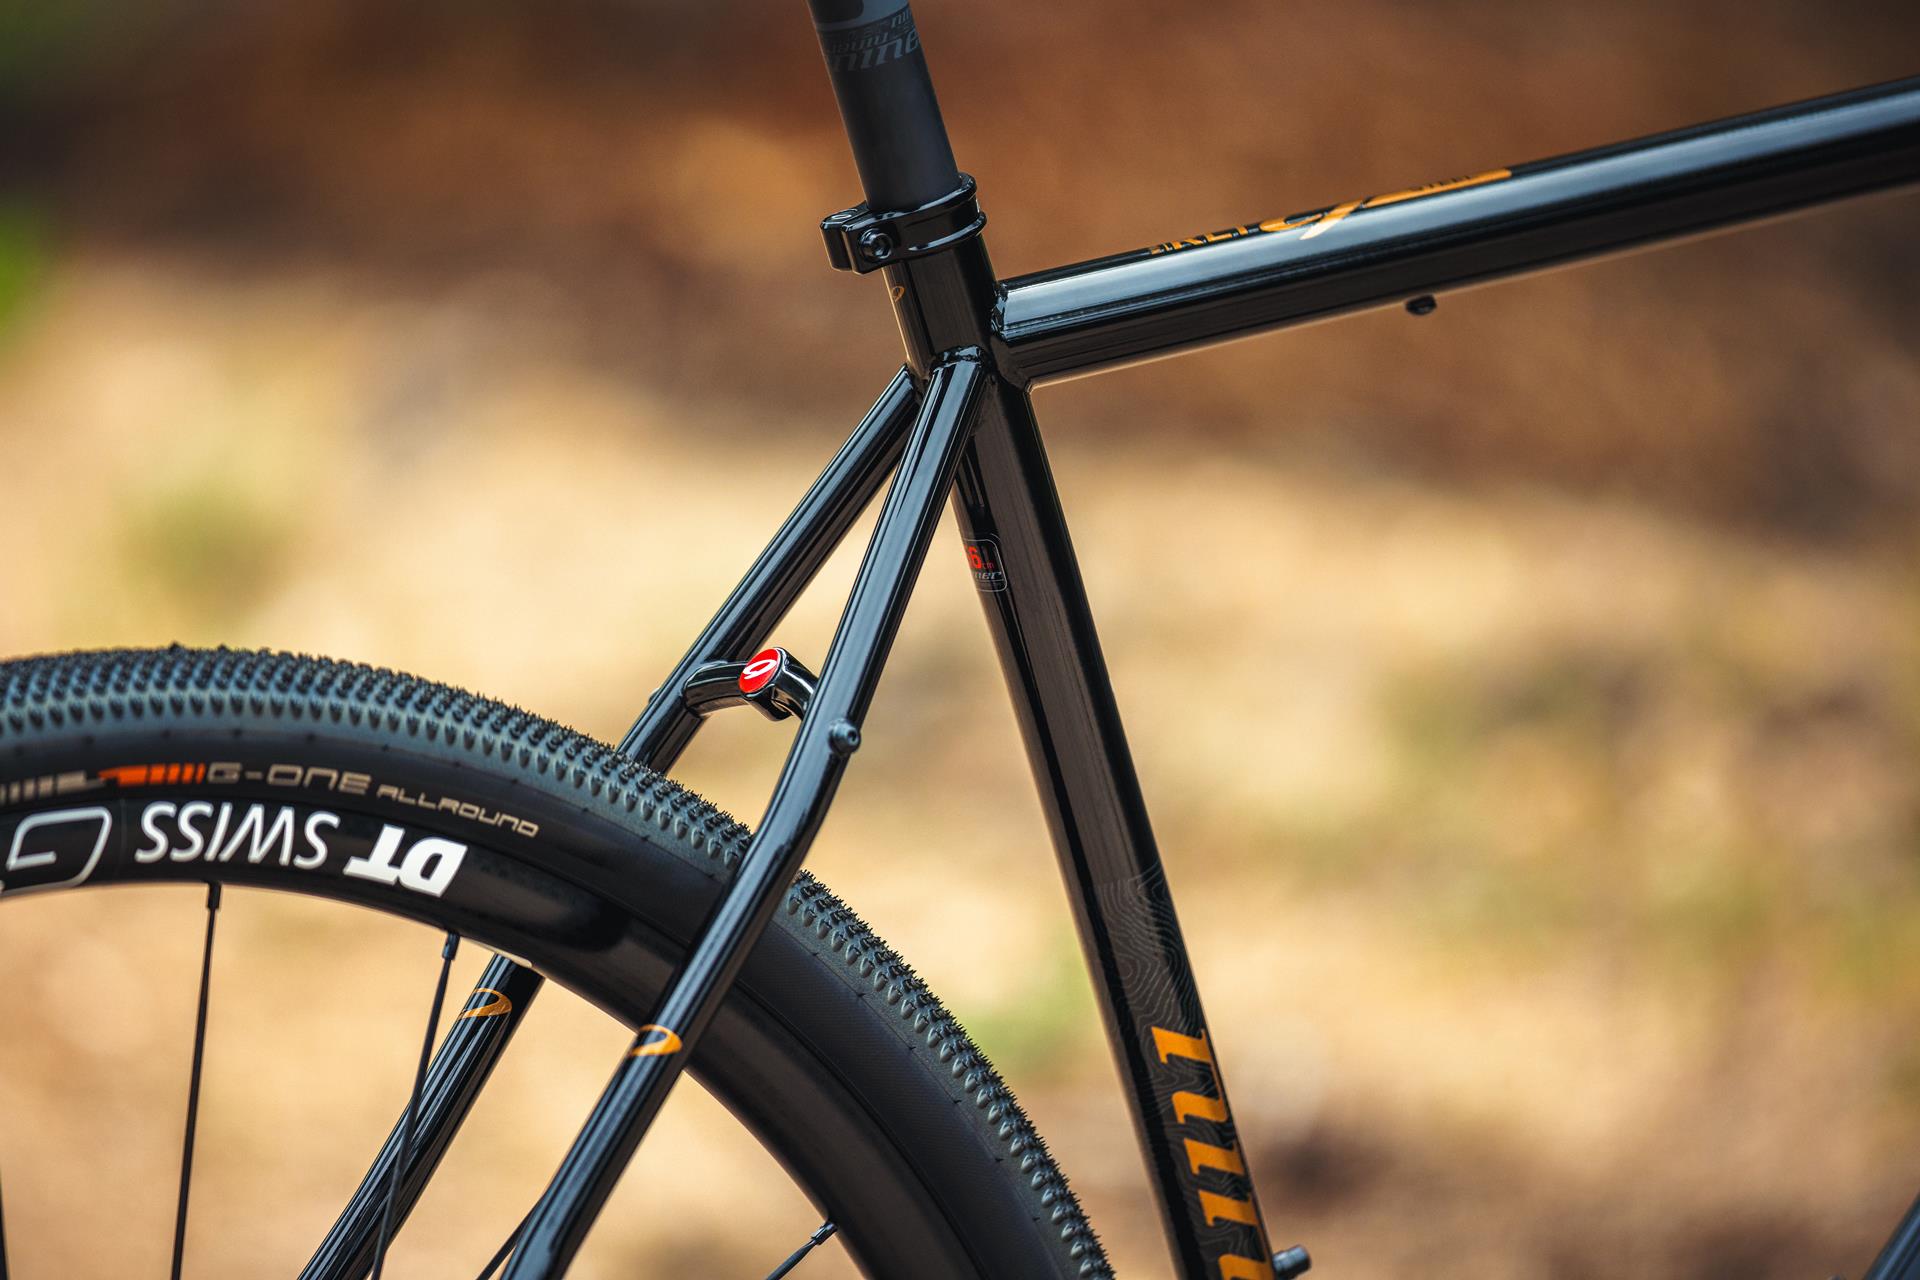 Niner RLT 2-star велосипед, черная бронза, 53